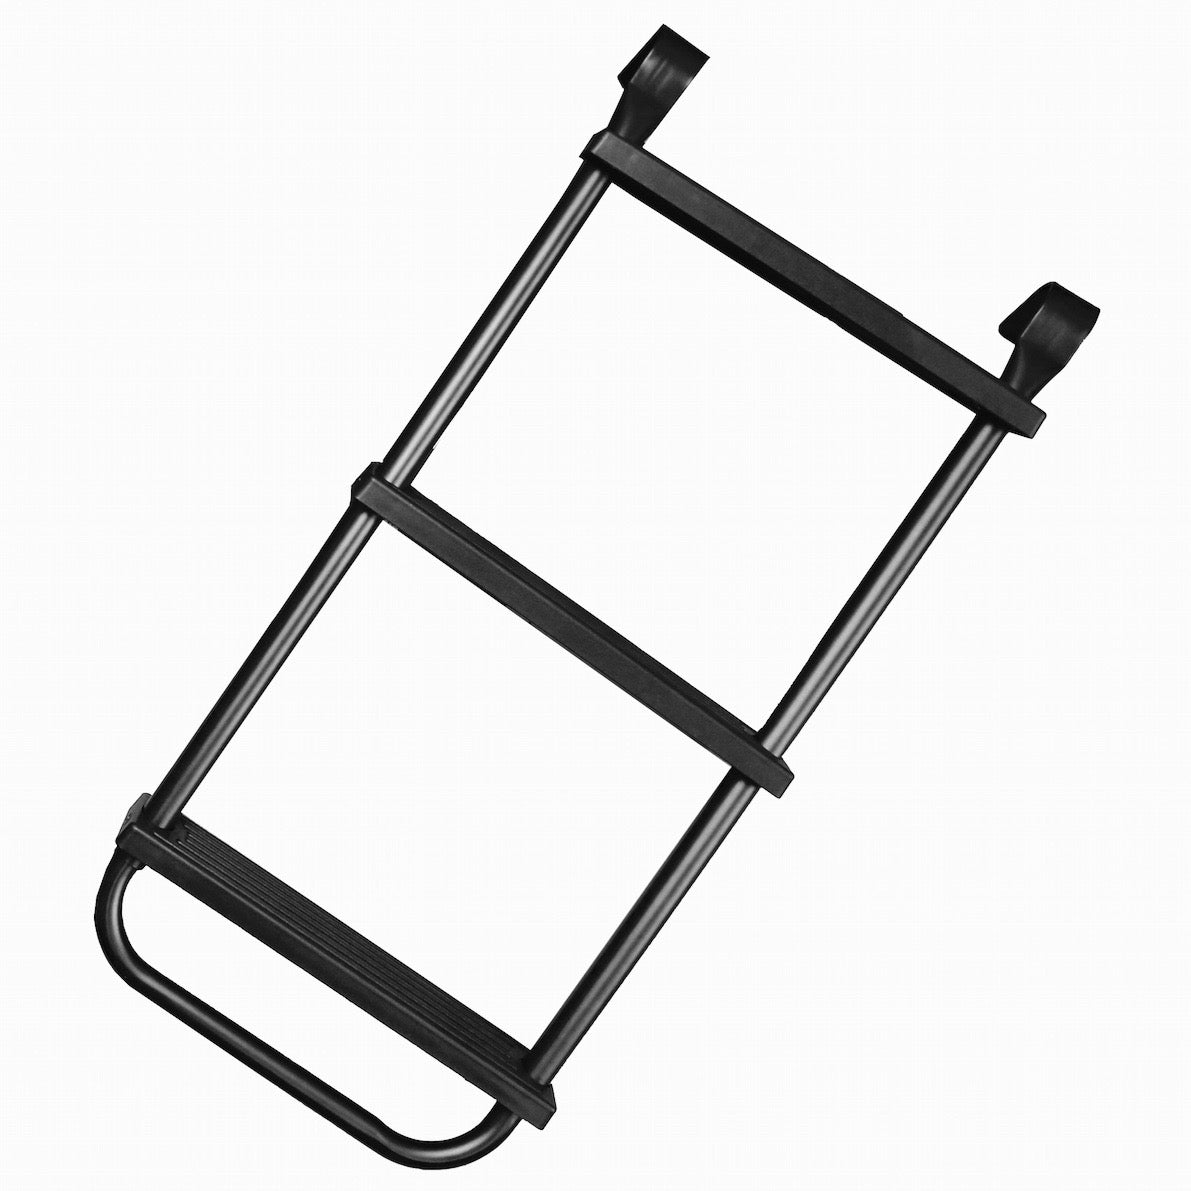 Rebo Adjustable Universal 3 Step Trampoline Ladder